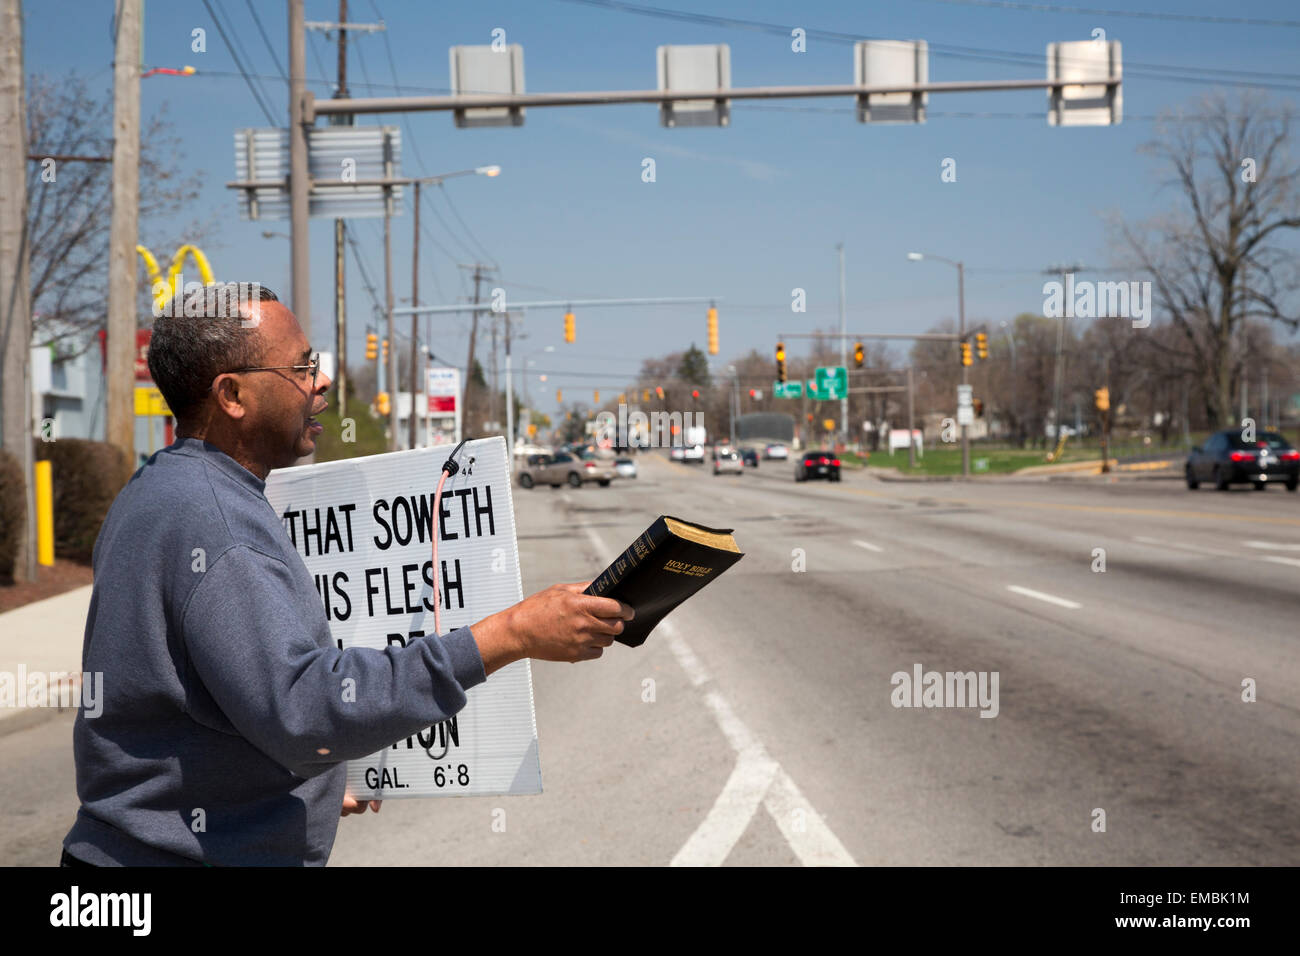 Toledo, Ohio - Rev. Eugene Rocker, pastor of Anchor Baptist Church, preaches on a street corner, holding his Bible. Stock Photo